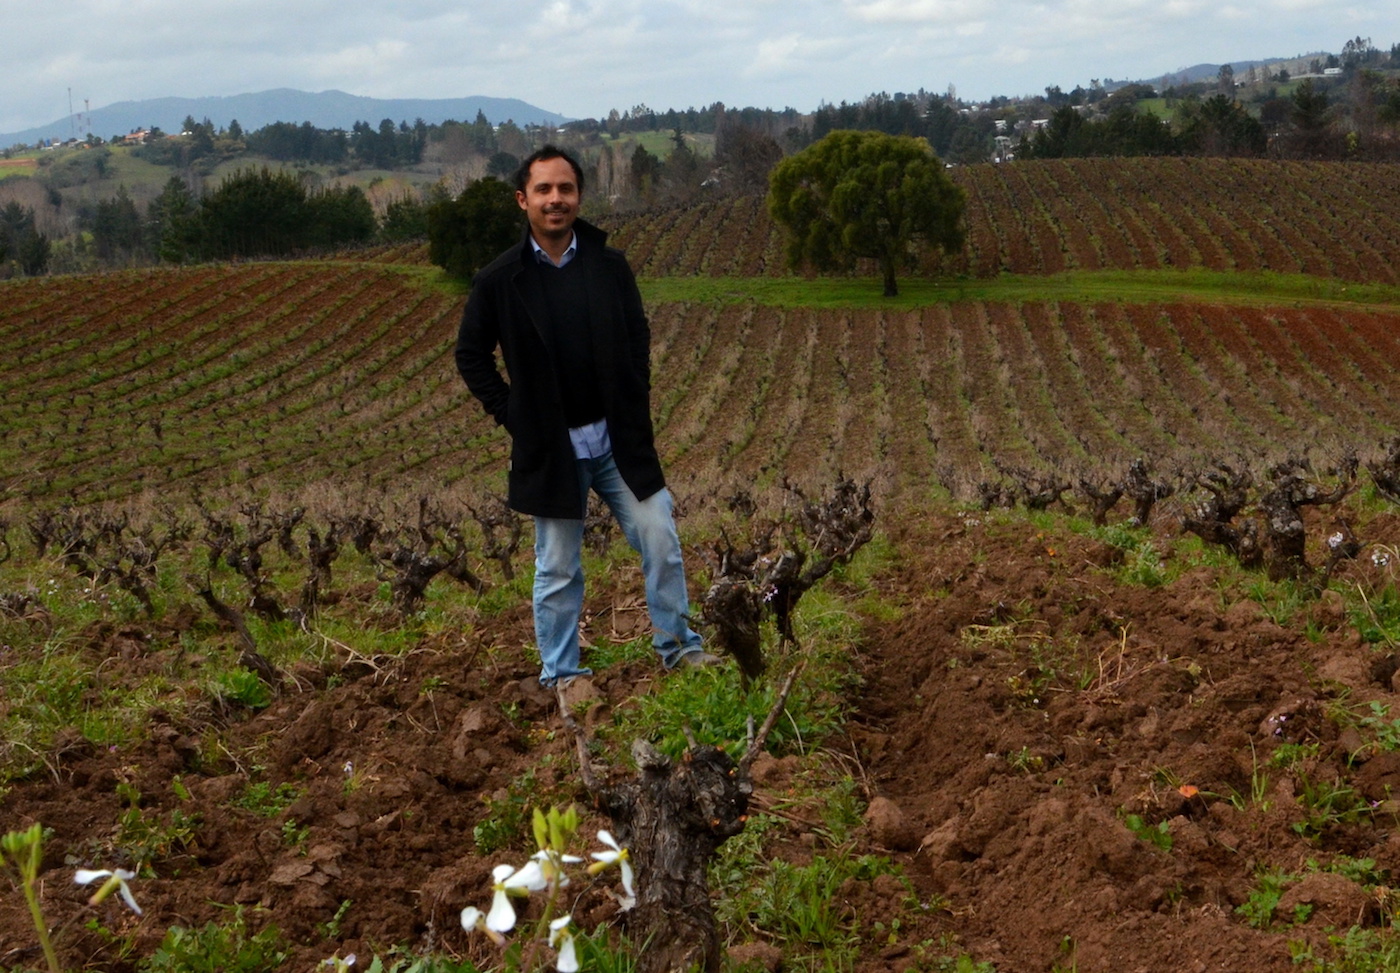 Leo Erazo terroir Itata interview, old vines and Pais Cinsault Moscatel Corinto Semillon in Itata